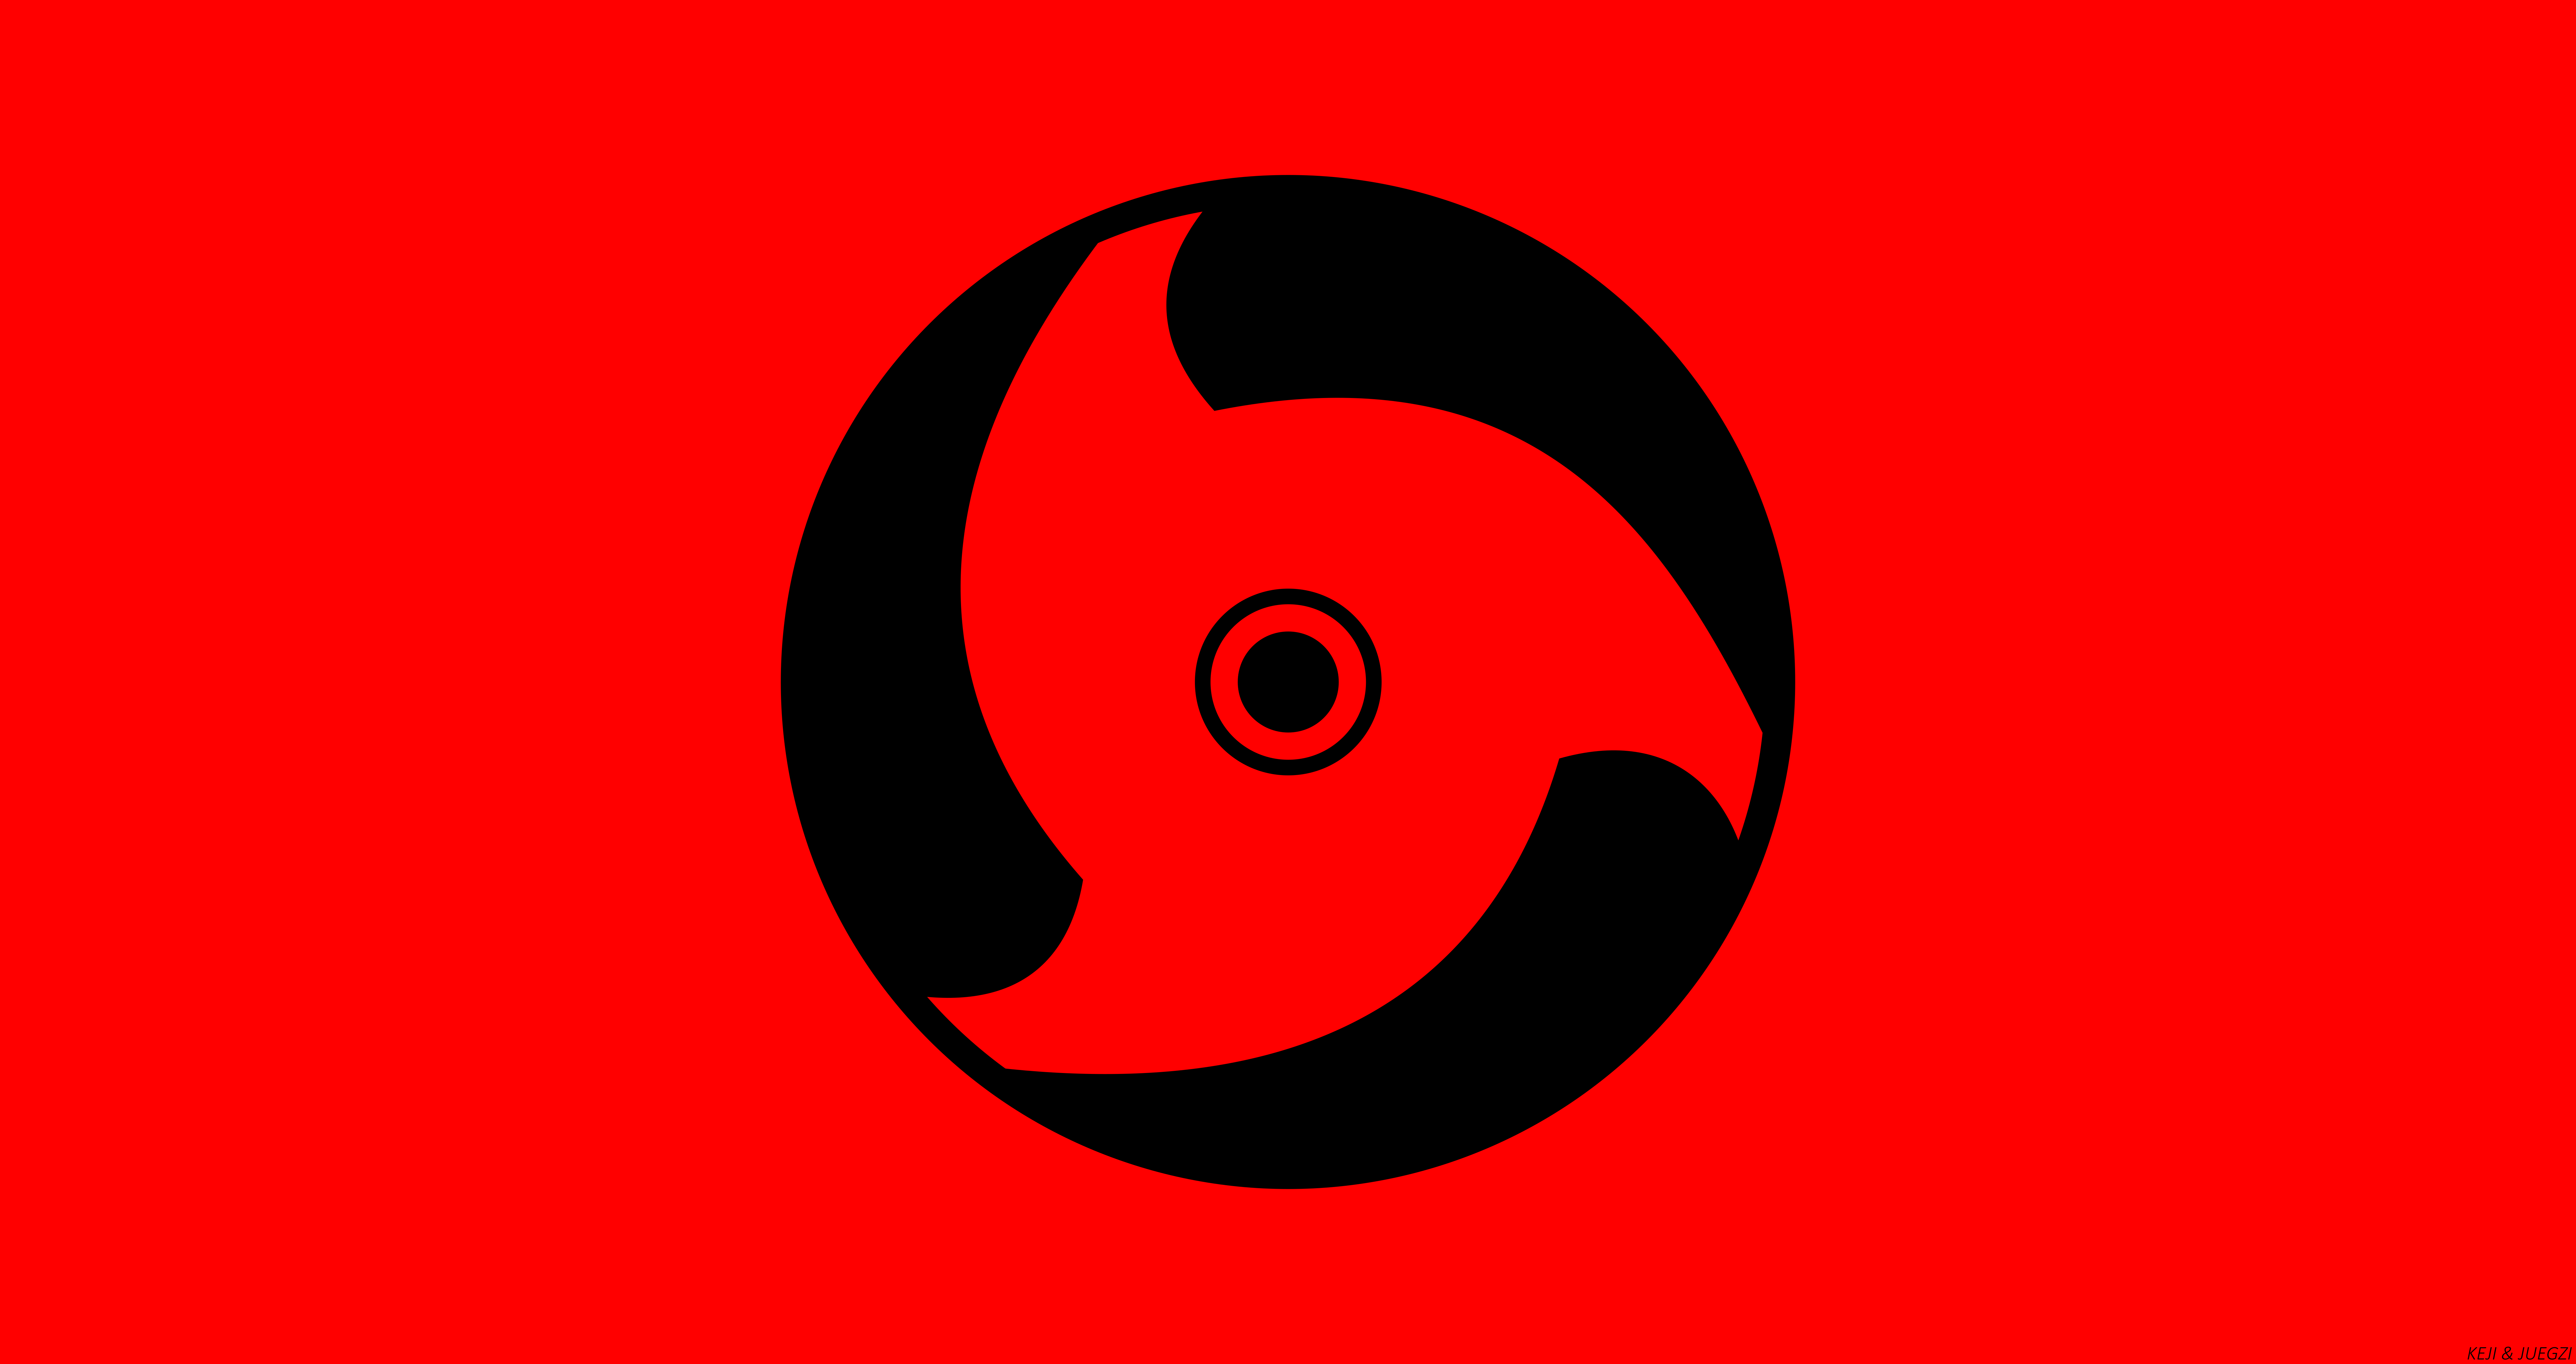 Download Sharingan (Naruto) Minimalist Mangekyō Sharingan Eye Anime ...